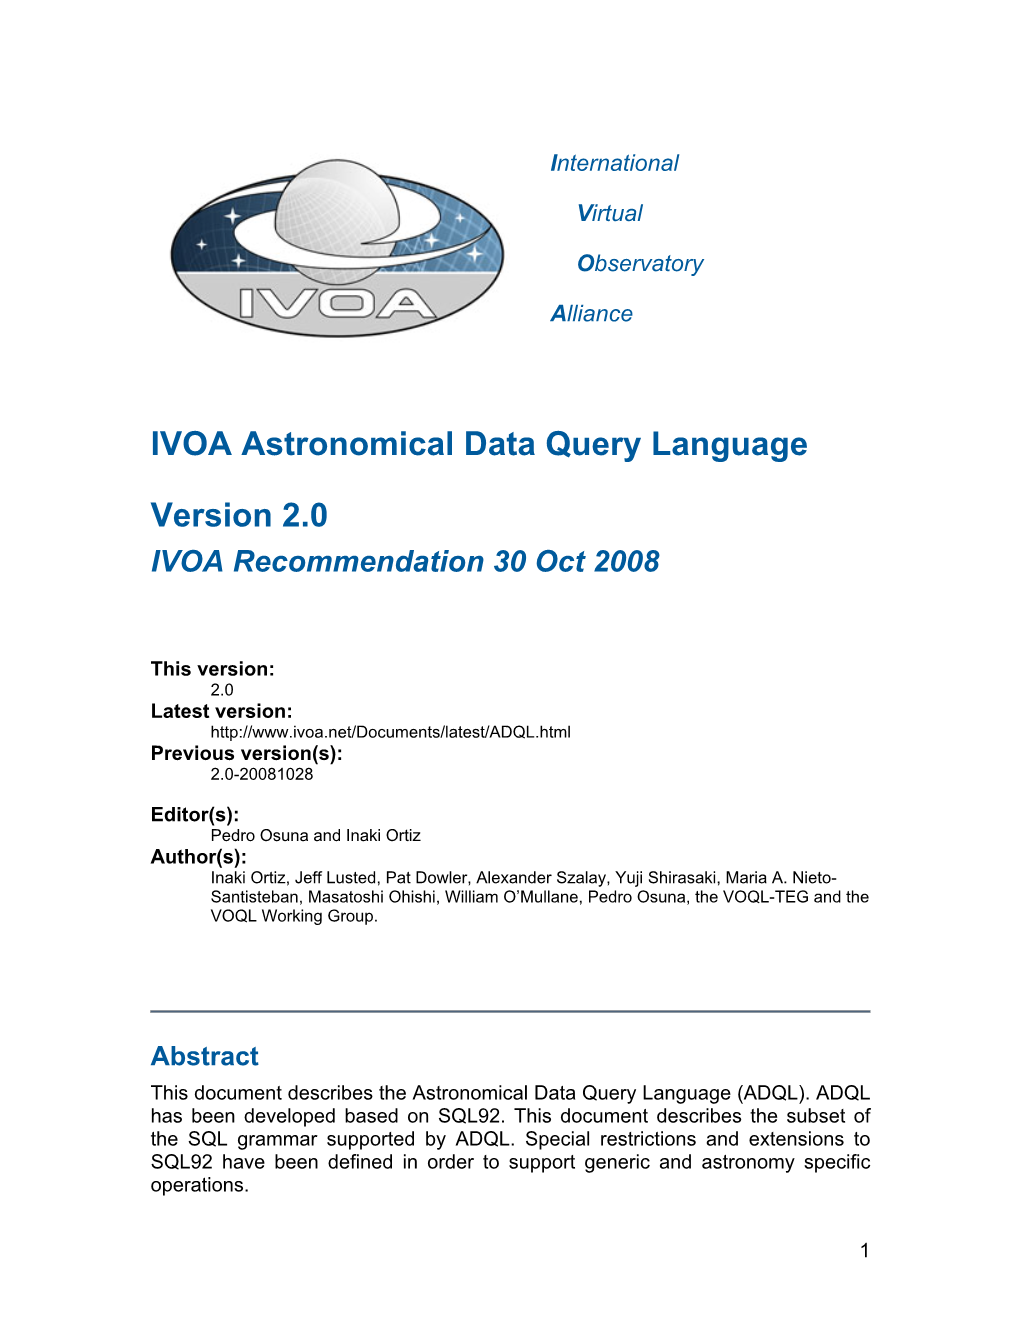 IVOA Astronomical Data Query Language Version